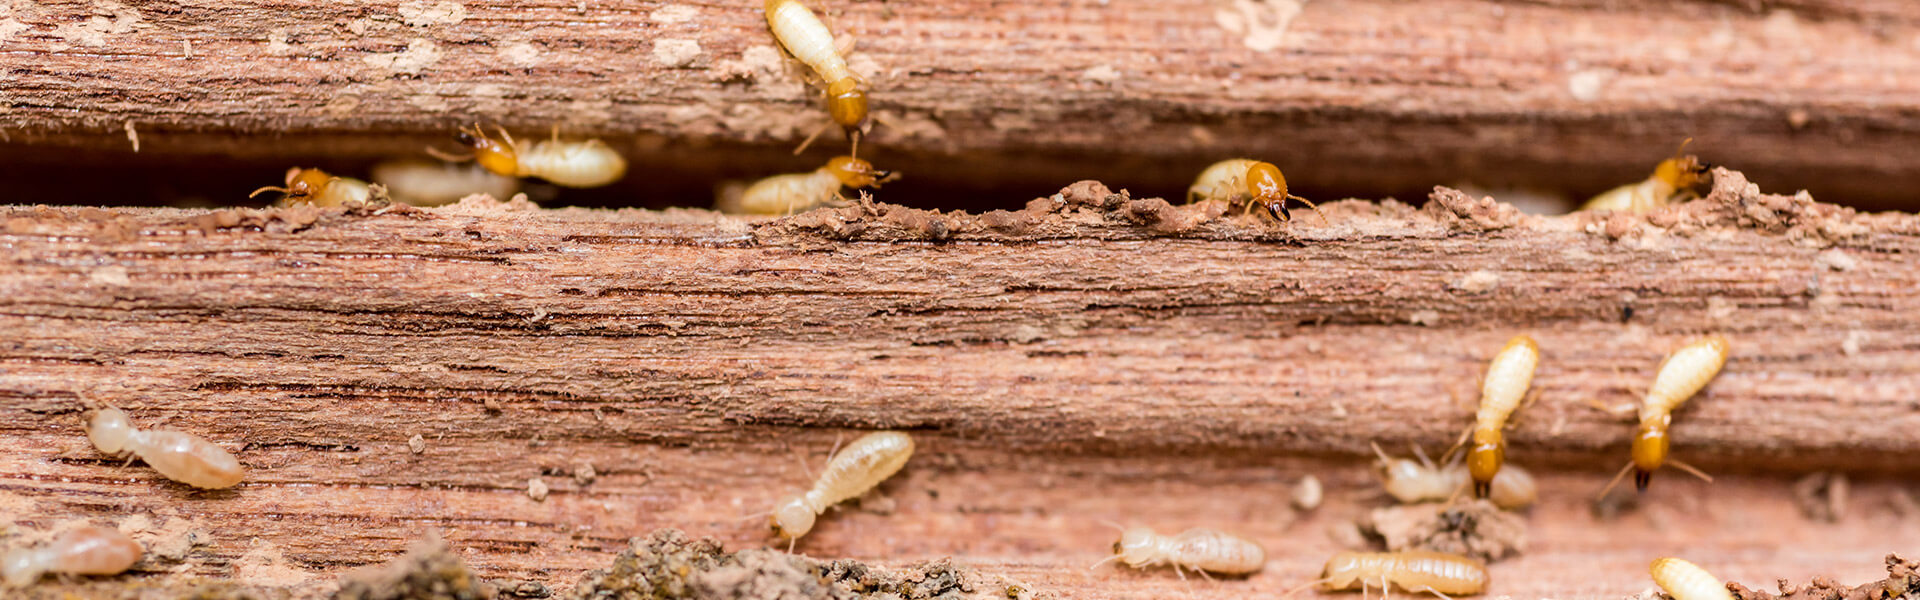 termite inspections in lincoln illinois